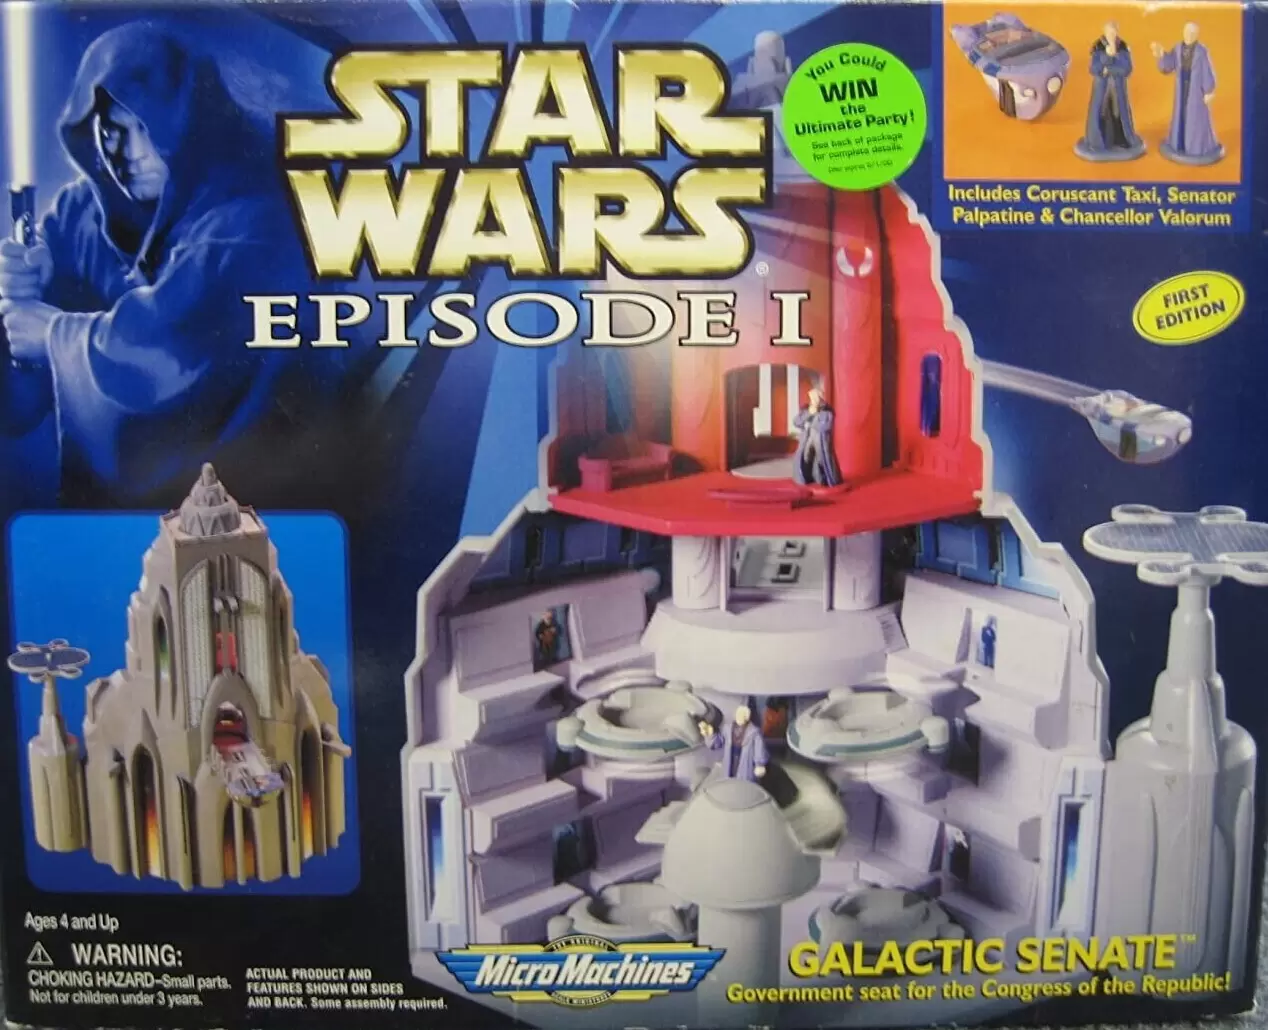 Play Sets - Galactic Senate